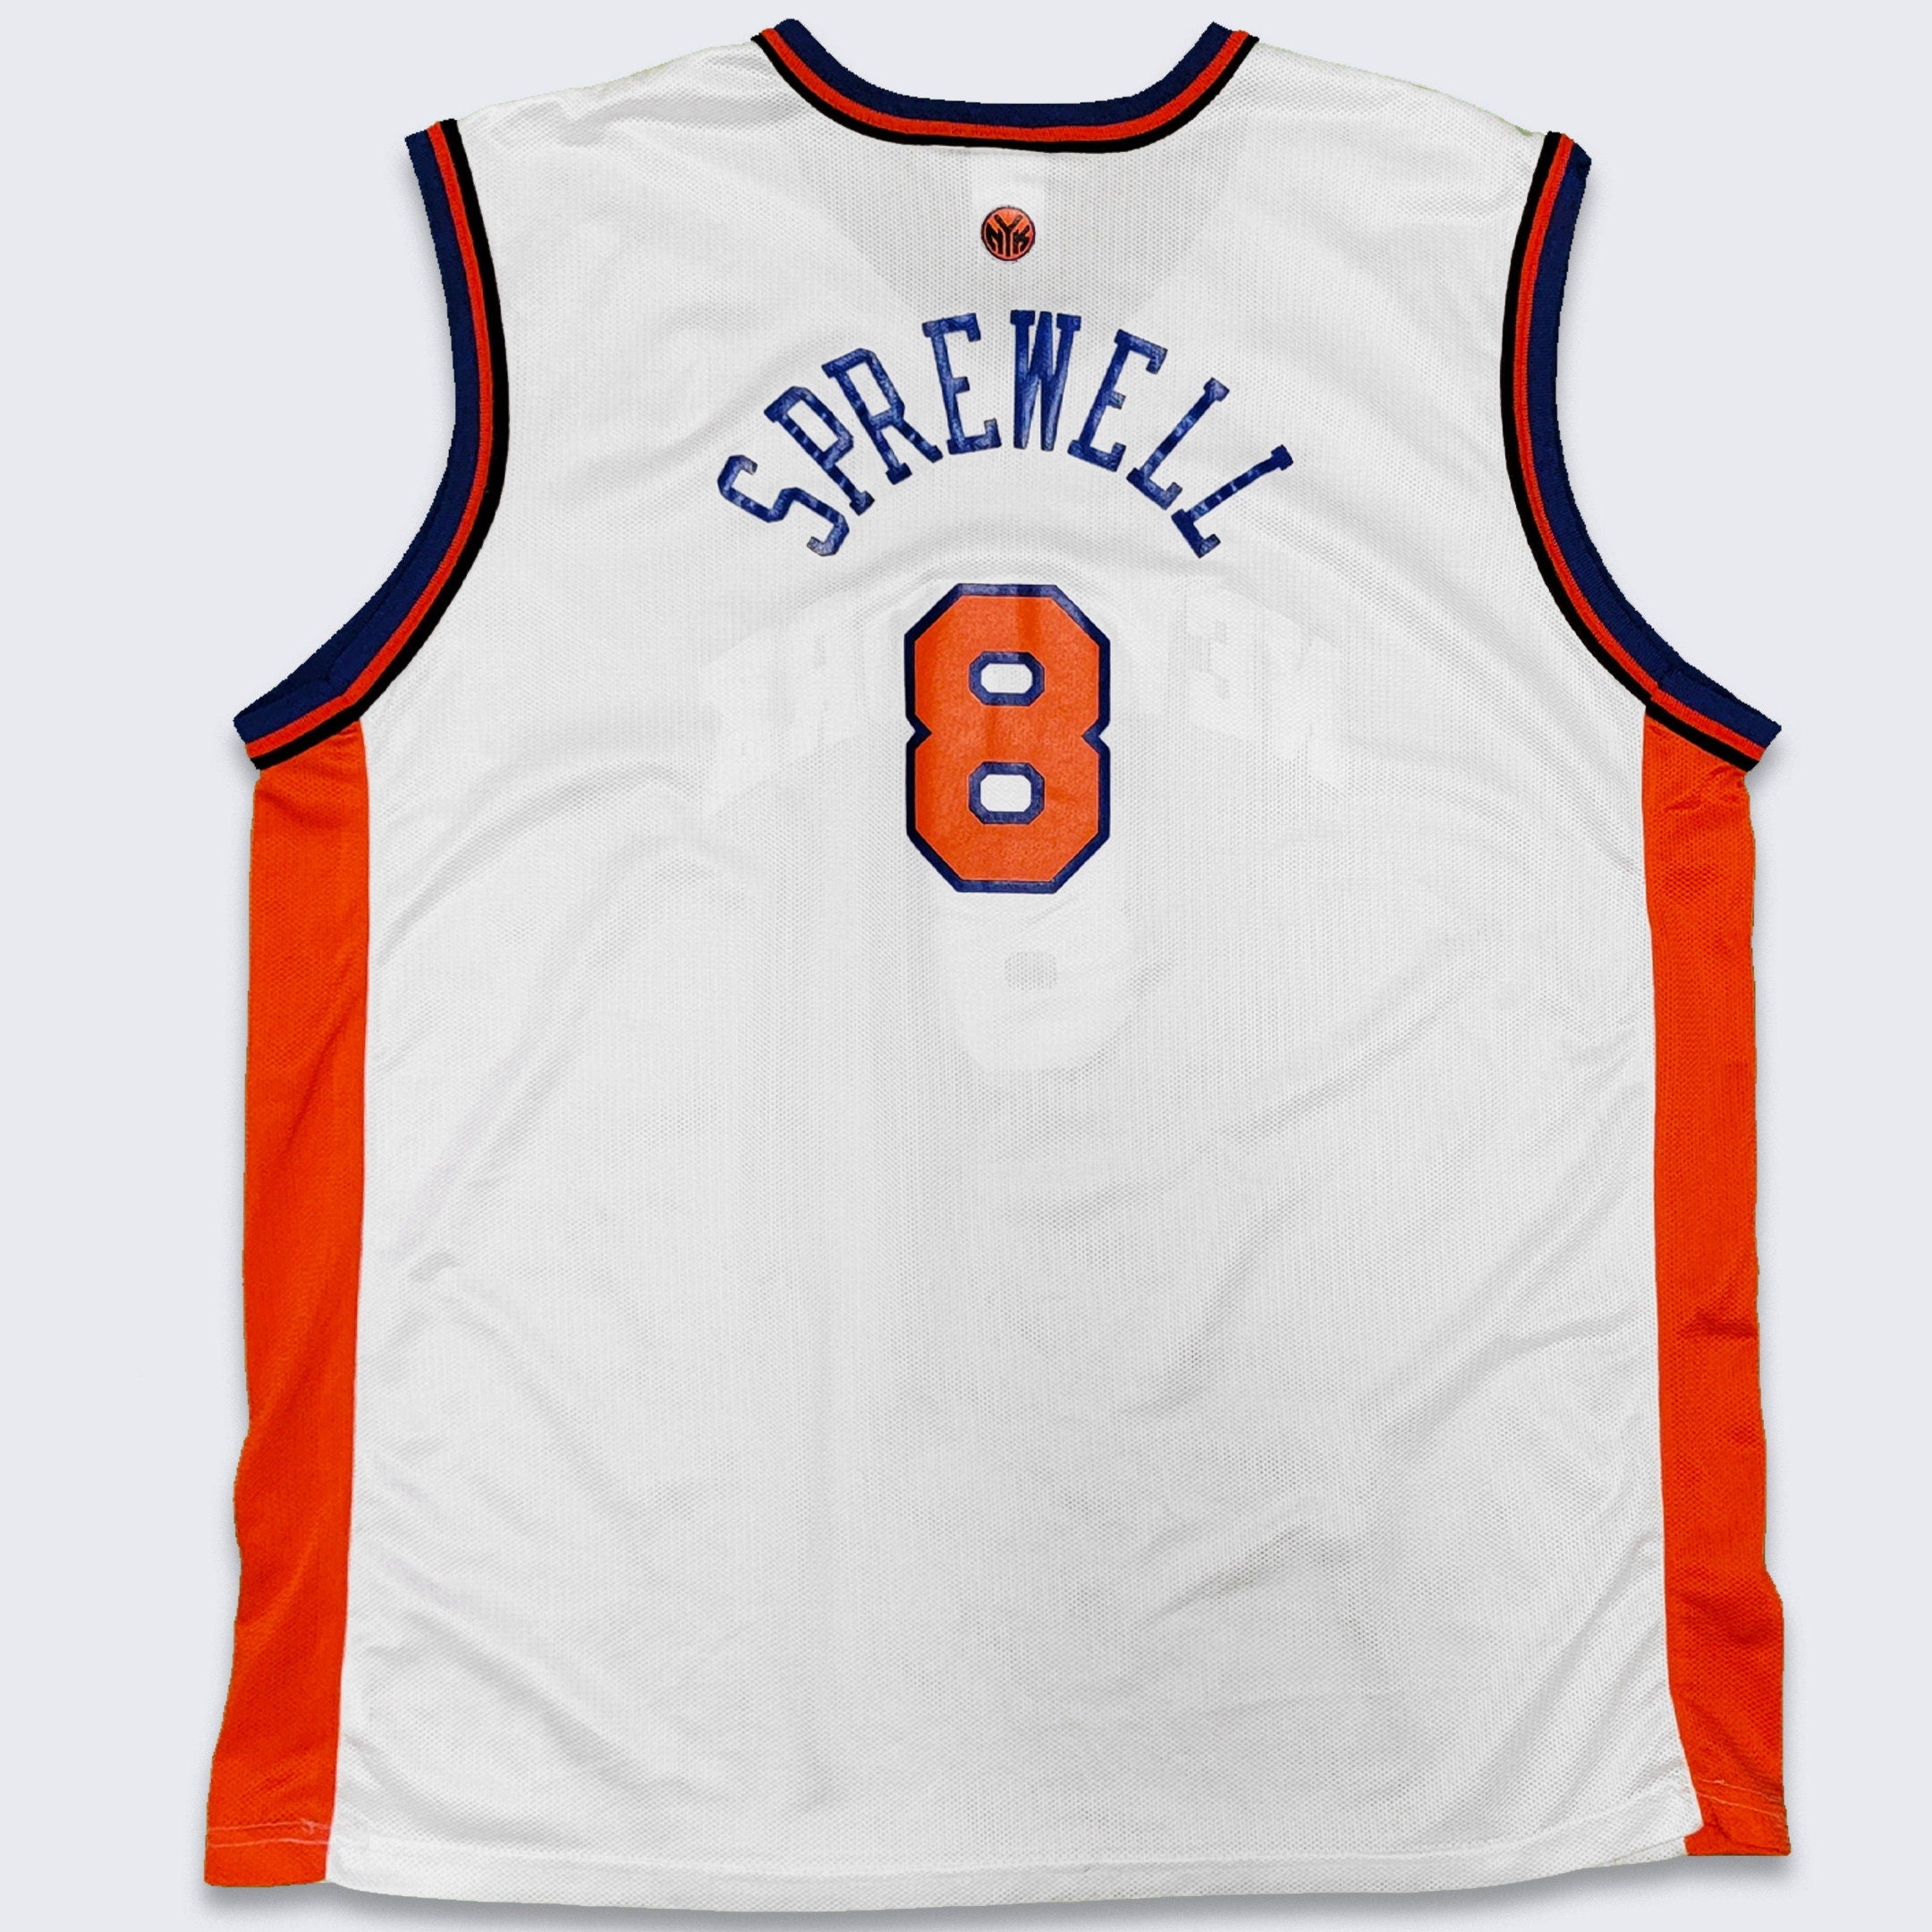 🏀 Latrell Sprewell New York Knicks Jersey Size Medium – The